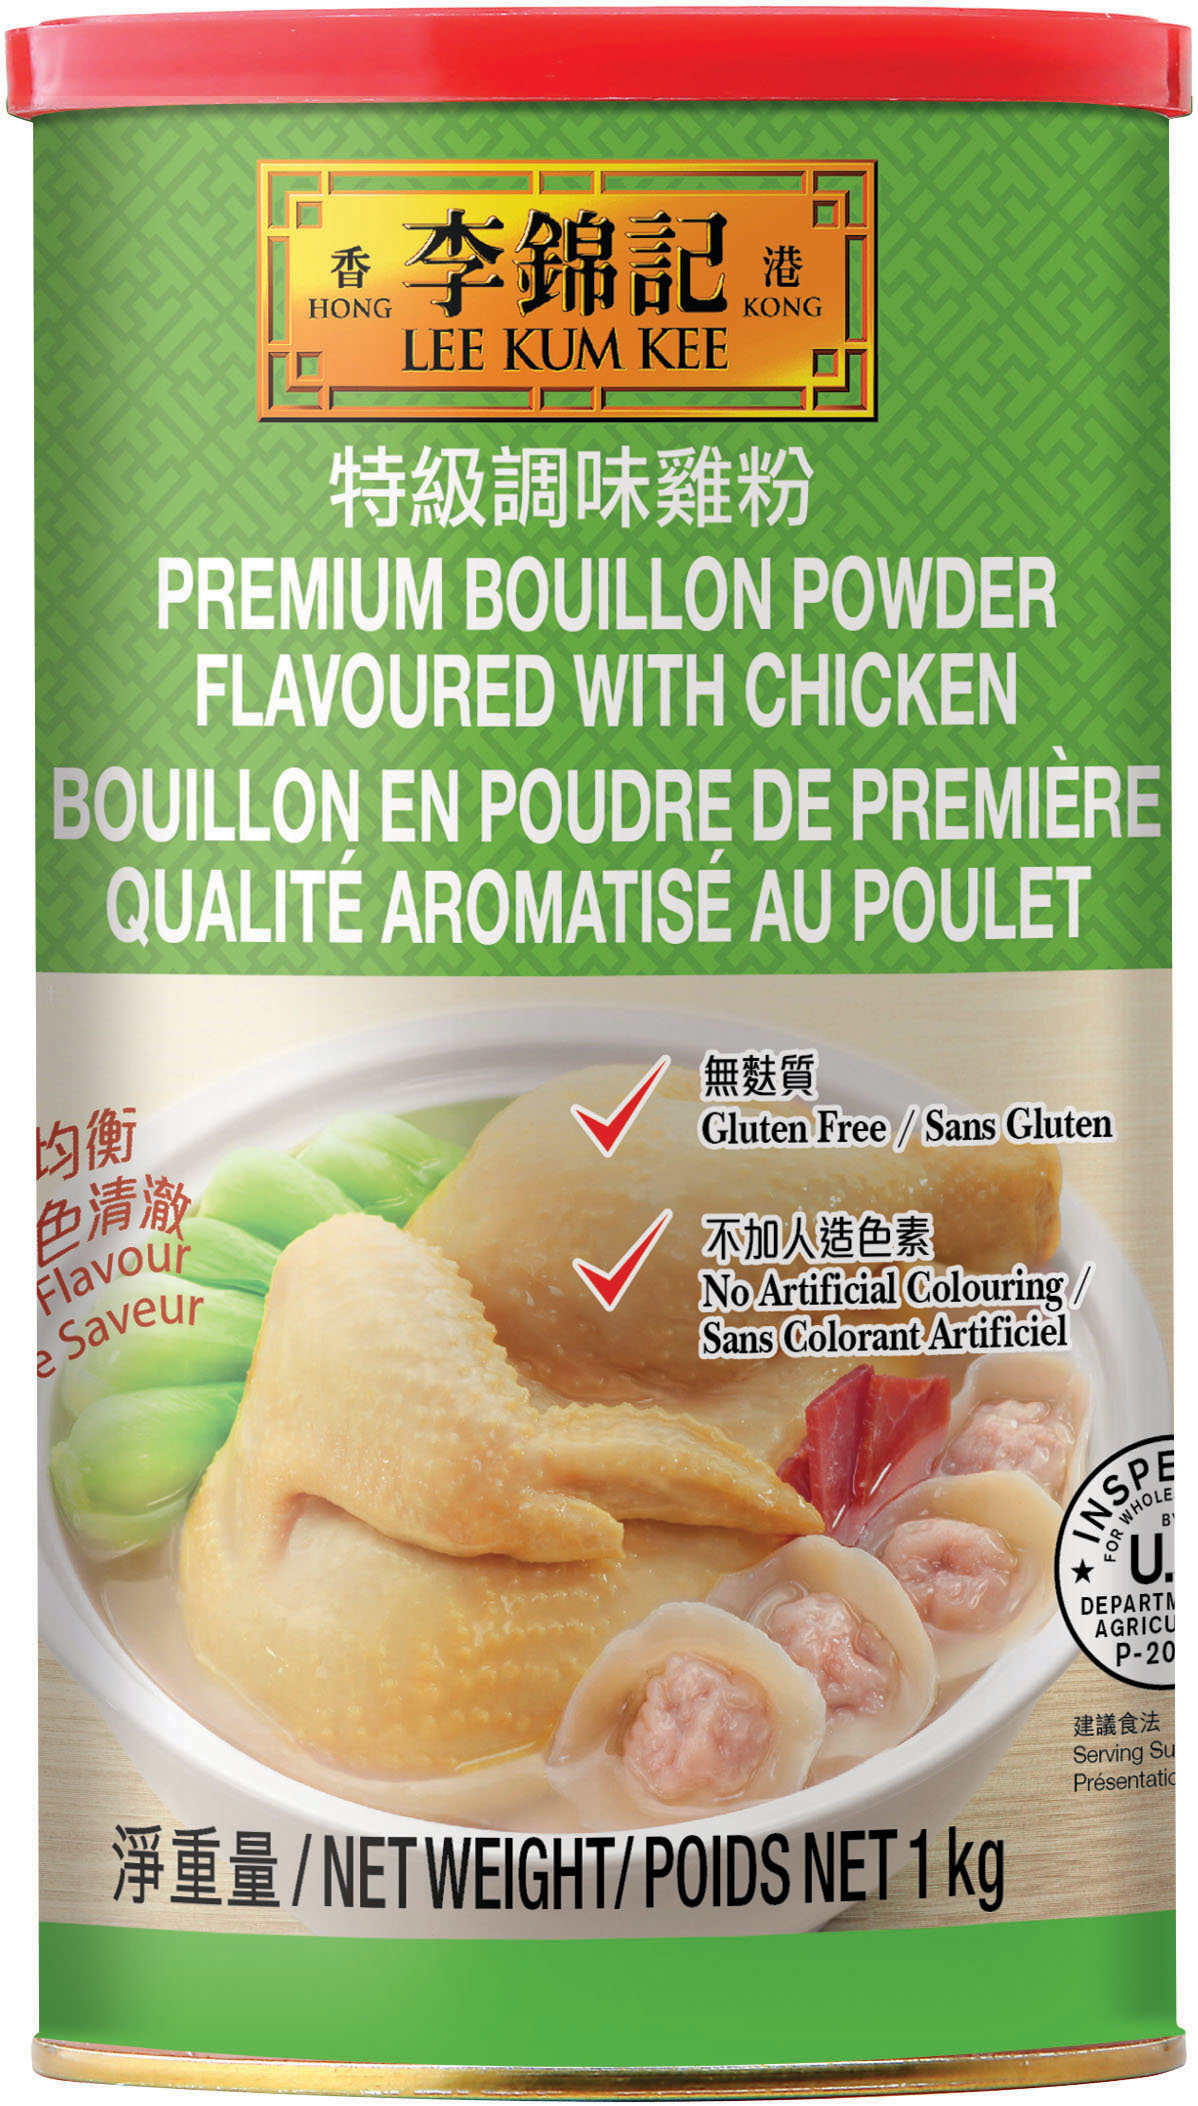 Premium Bouillon Powder Flavored with Chicken, 1 kg can